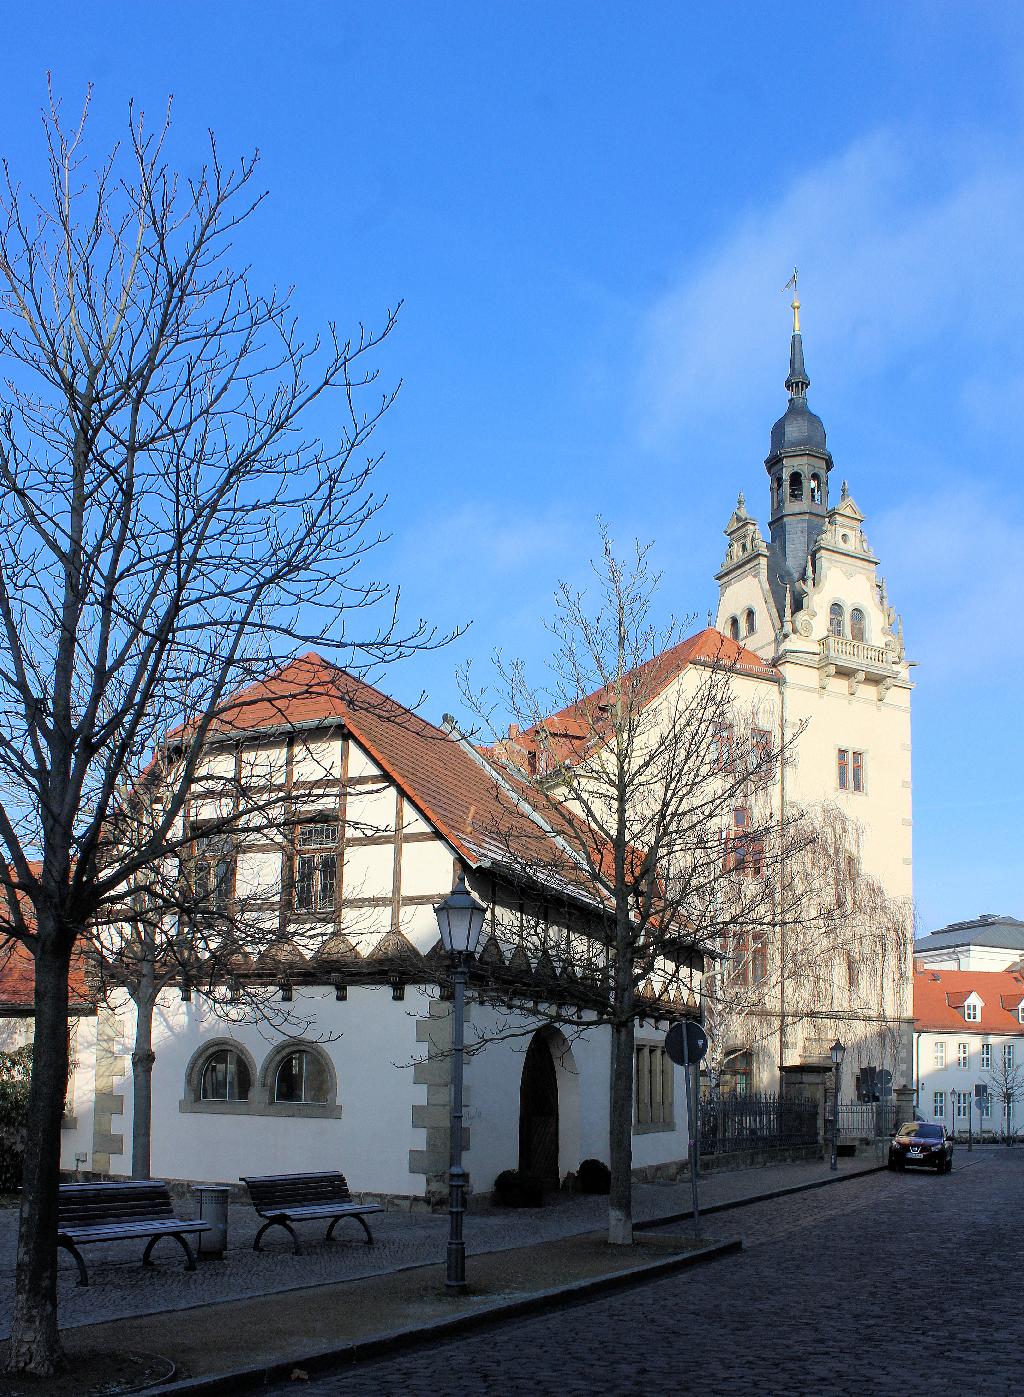 Rathaus Bernburg in Bernburg